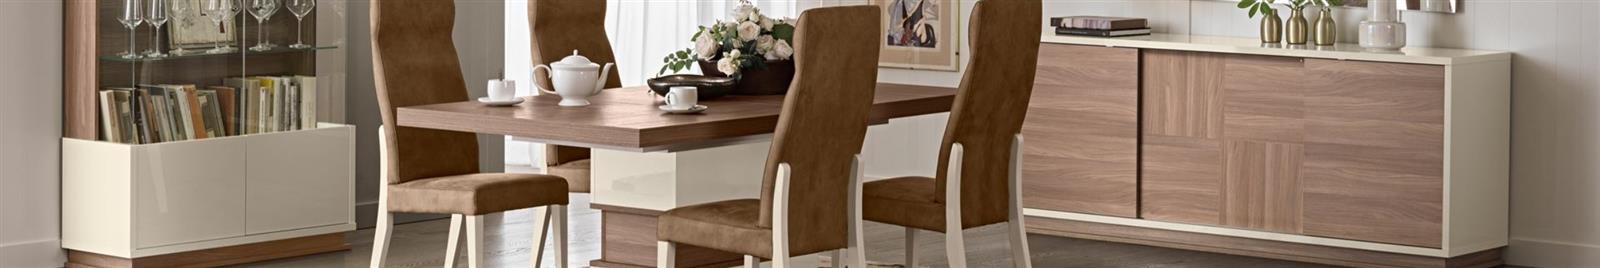 Evolution - Modern Italian Dining Room Furniture